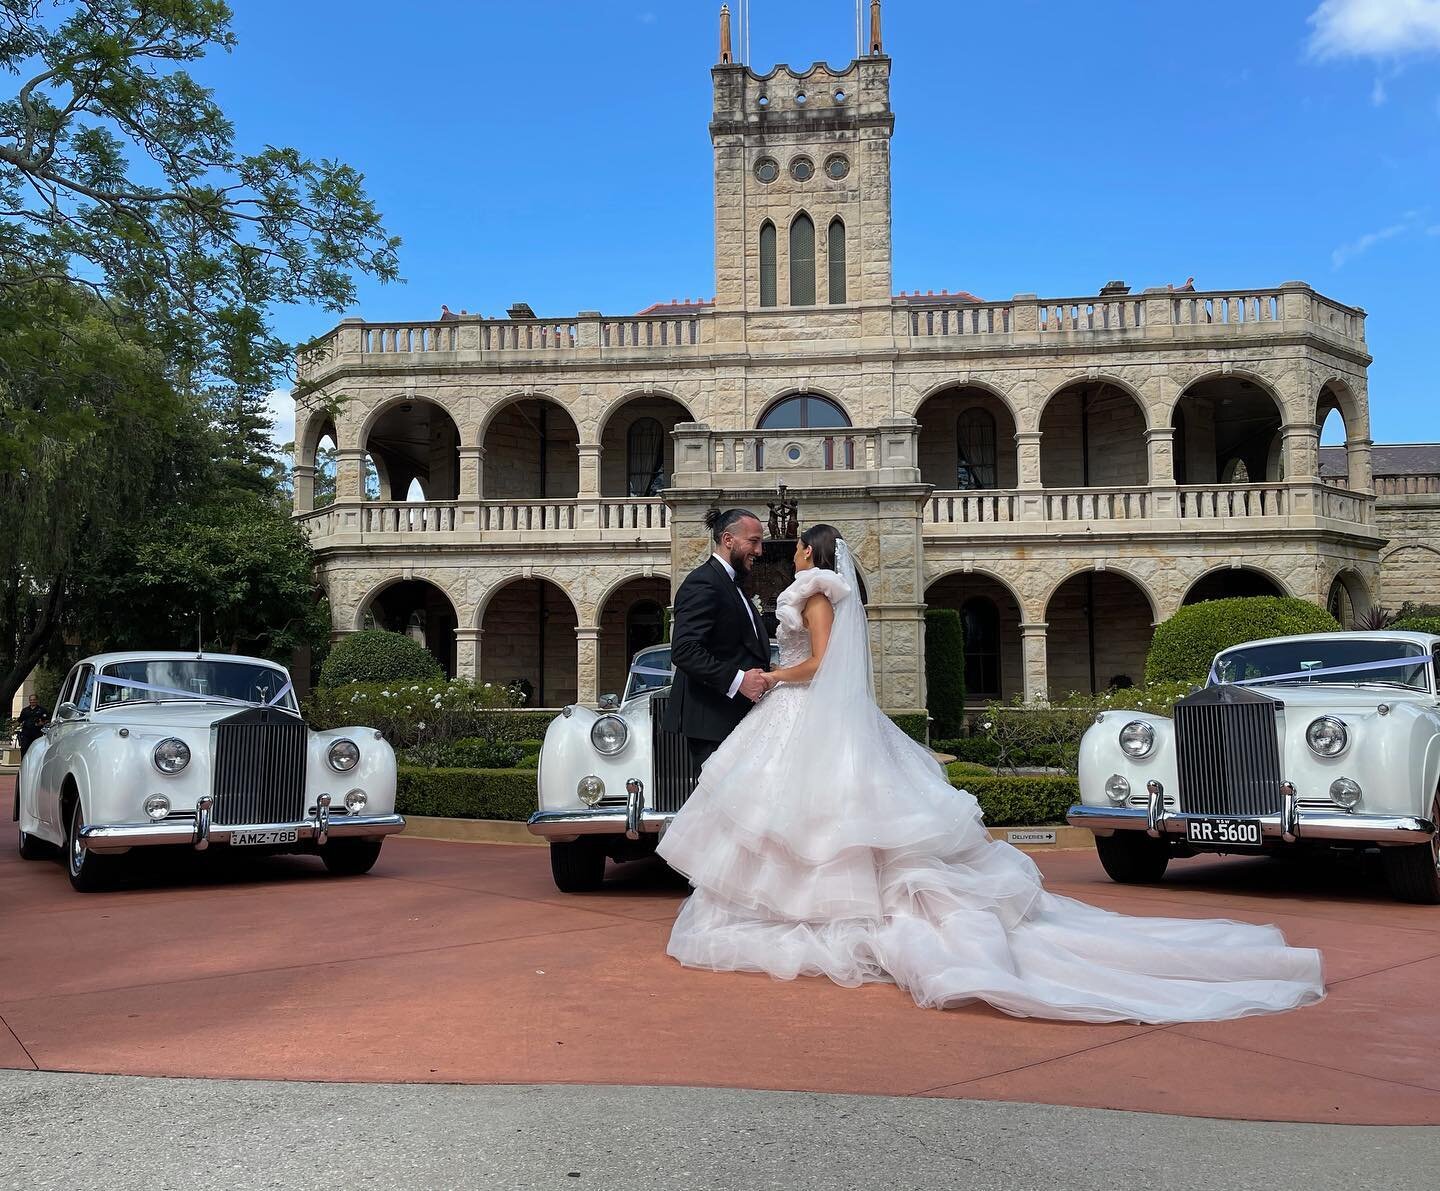 A beautiful castle and a beautiful couple!  Congratulations Susan &amp; Hussein 💕 @weddingsbynavarra @emiliobphotography @nyc_films 

#bride #groom #wedding #rollsroyce #love #classic #sydney #weddingday